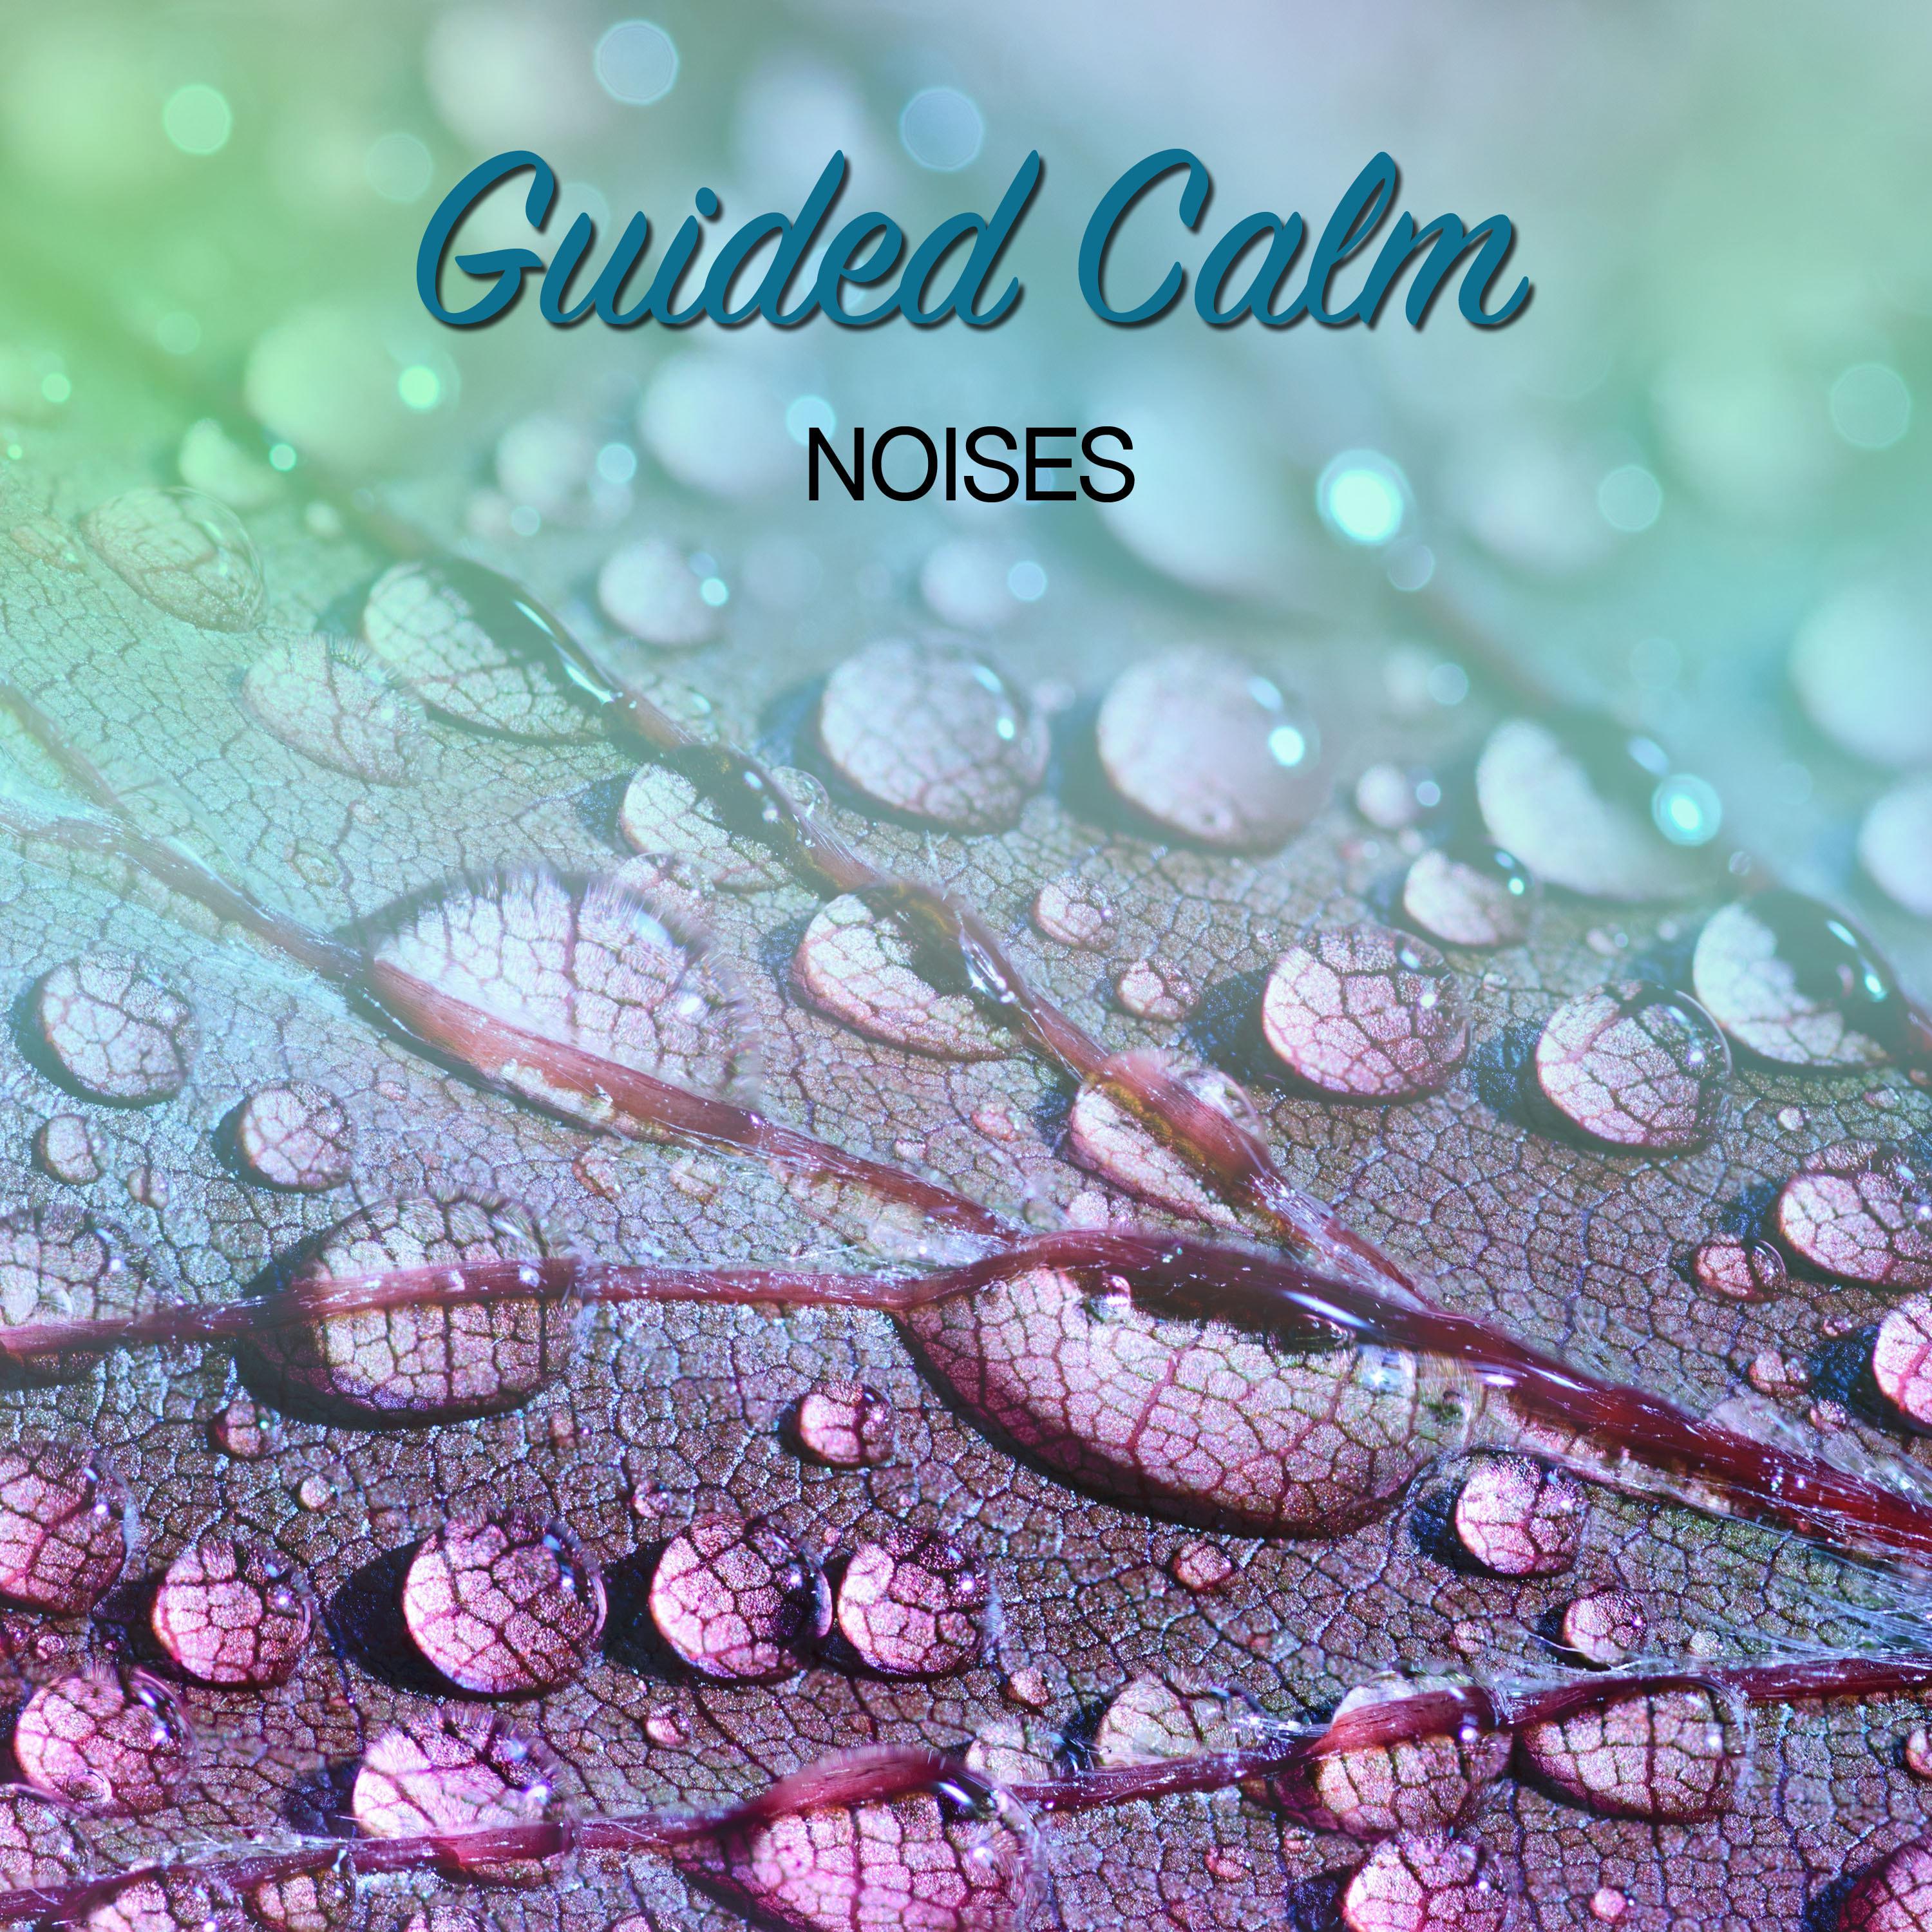 #18 Guided Calm Noises for Asian Spa, Meditation & Yoga